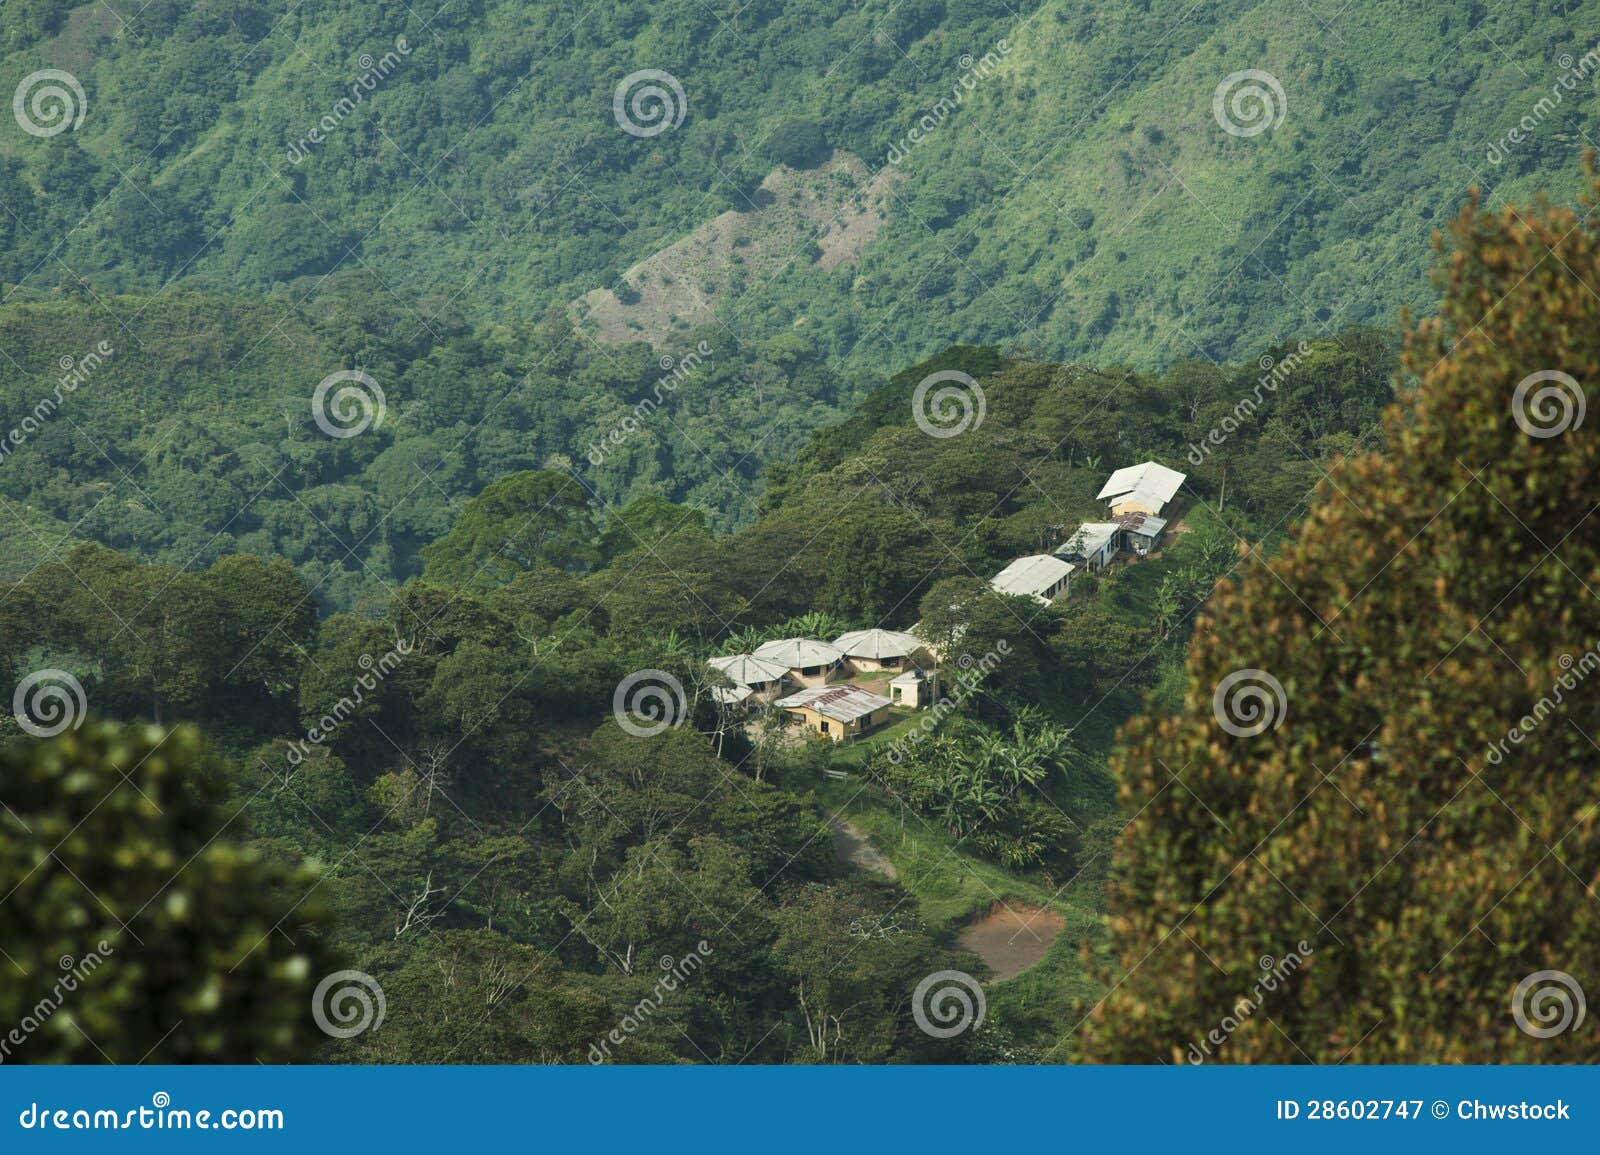 colombia - settlement in the rainforest of the sierra nevada de santa marta